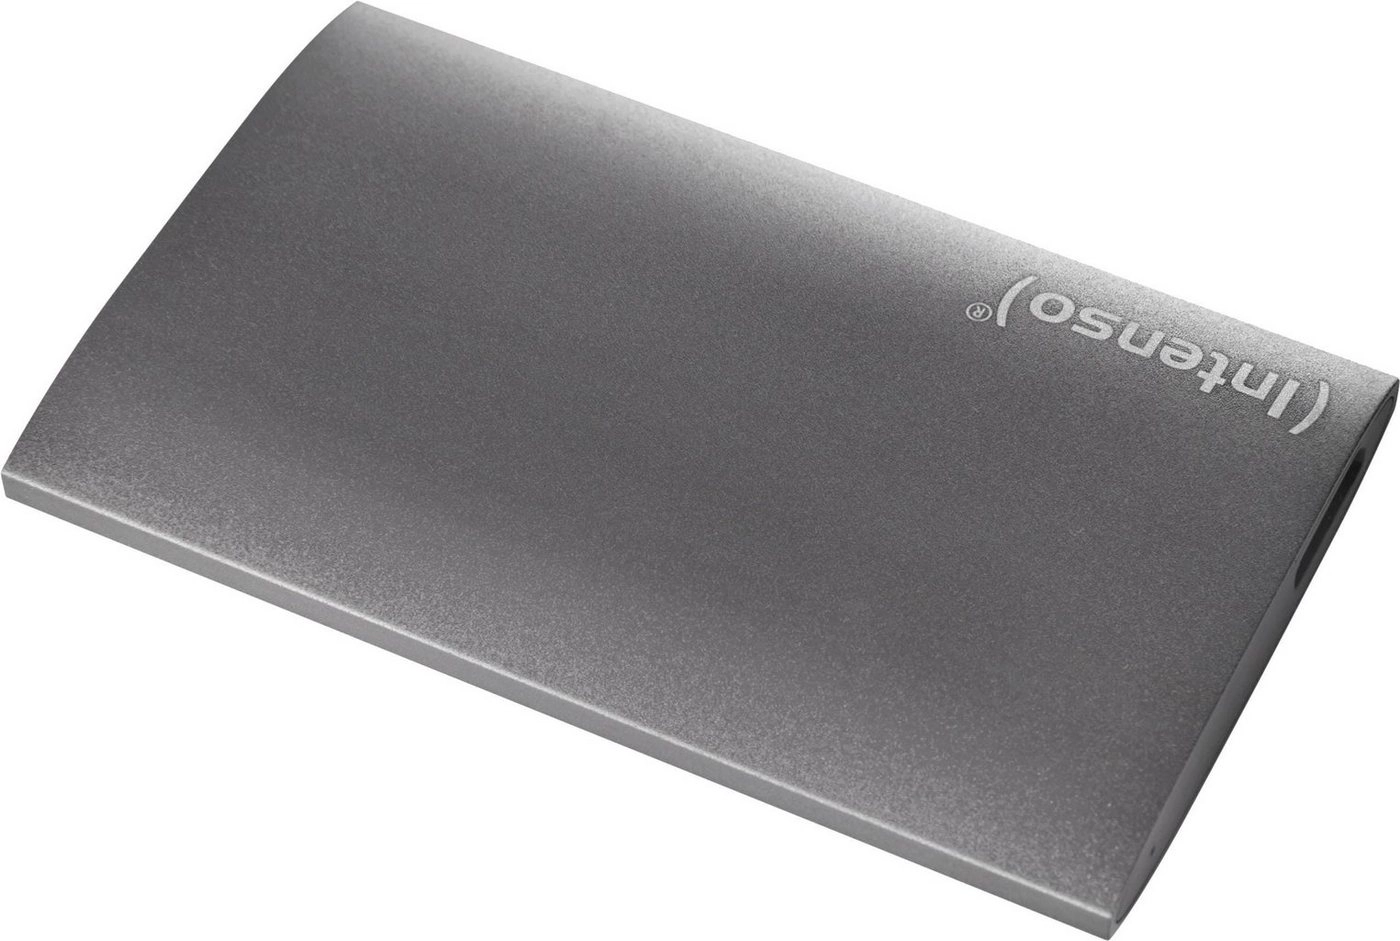 Portable SSD Premium 512 GB, Externe SSD